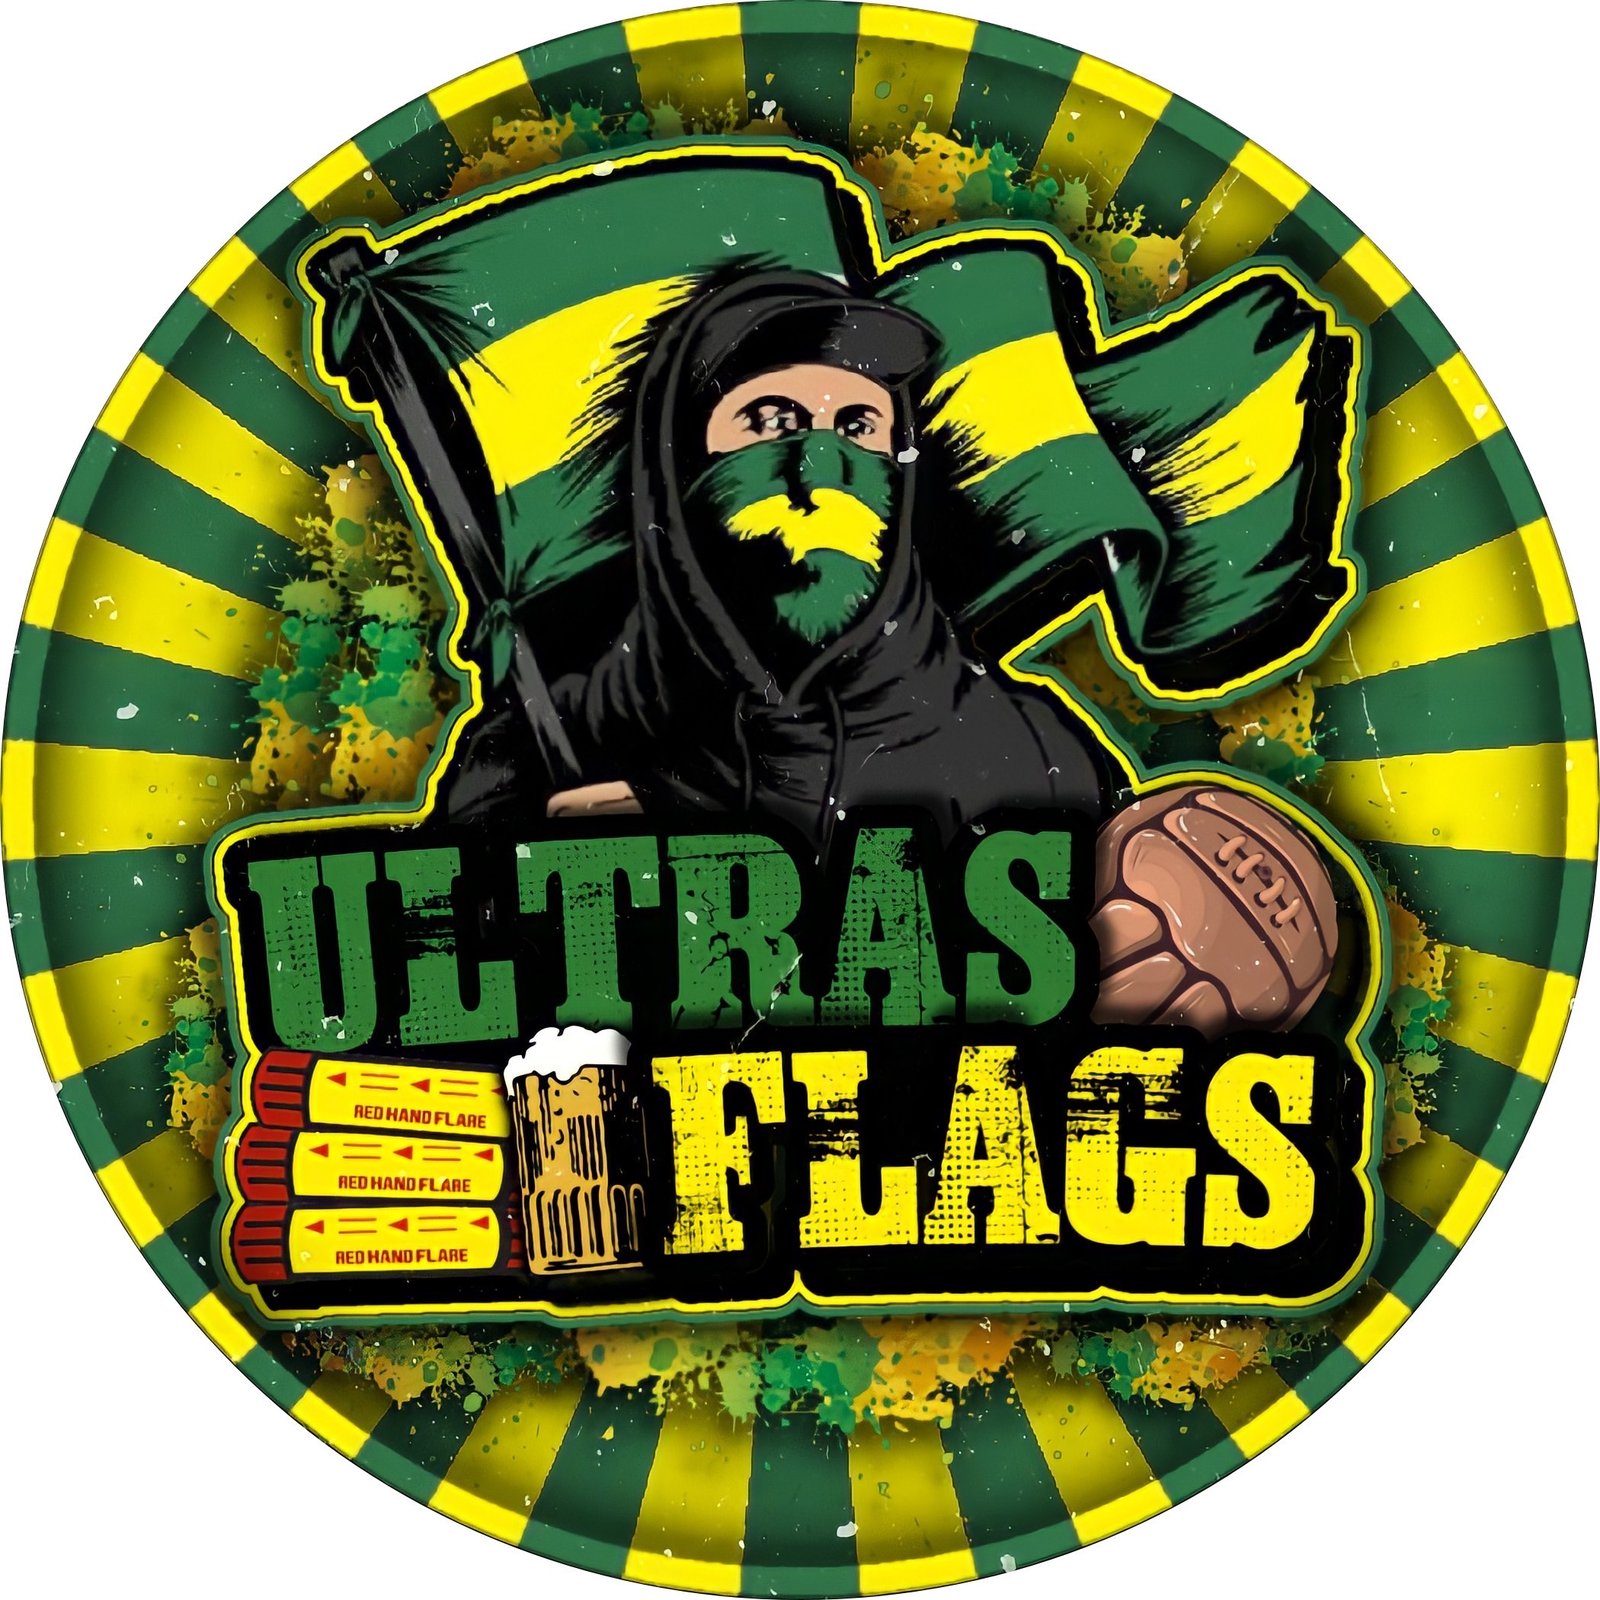 Ultras Beer - YouTube